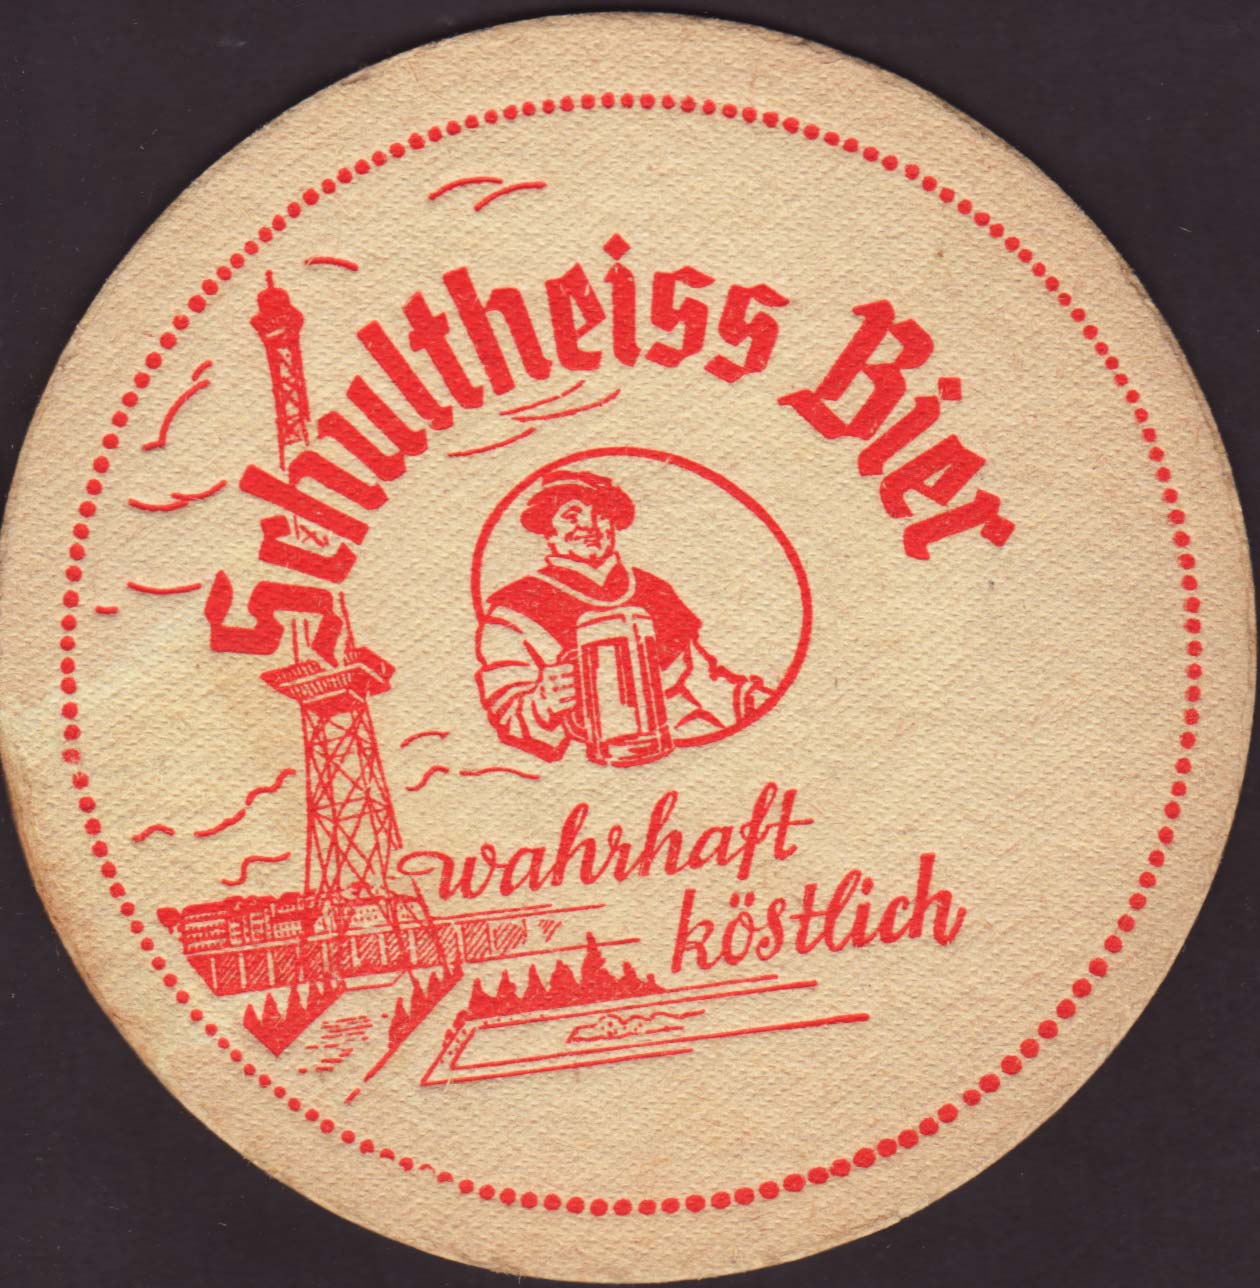 beer-coaster-coaster-number-23-1-brewery-berliner-schultheiss-city-berlin-germany